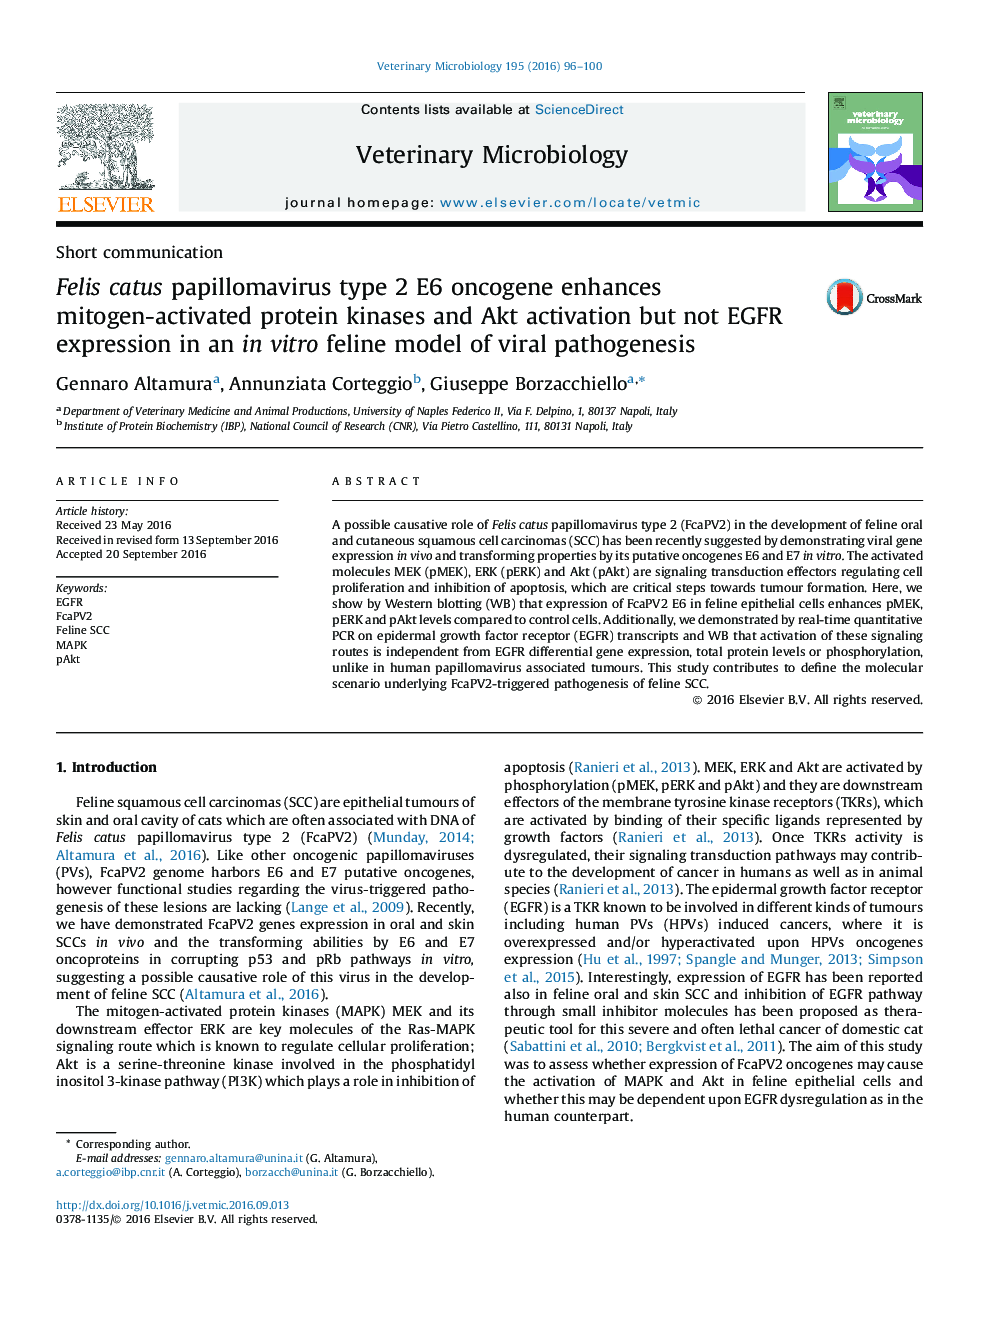 Felis catus papillomavirus type 2 E6 oncogene enhances mitogen-activated protein kinases and Akt activation but not EGFR expression in an in vitro feline model of viral pathogenesis